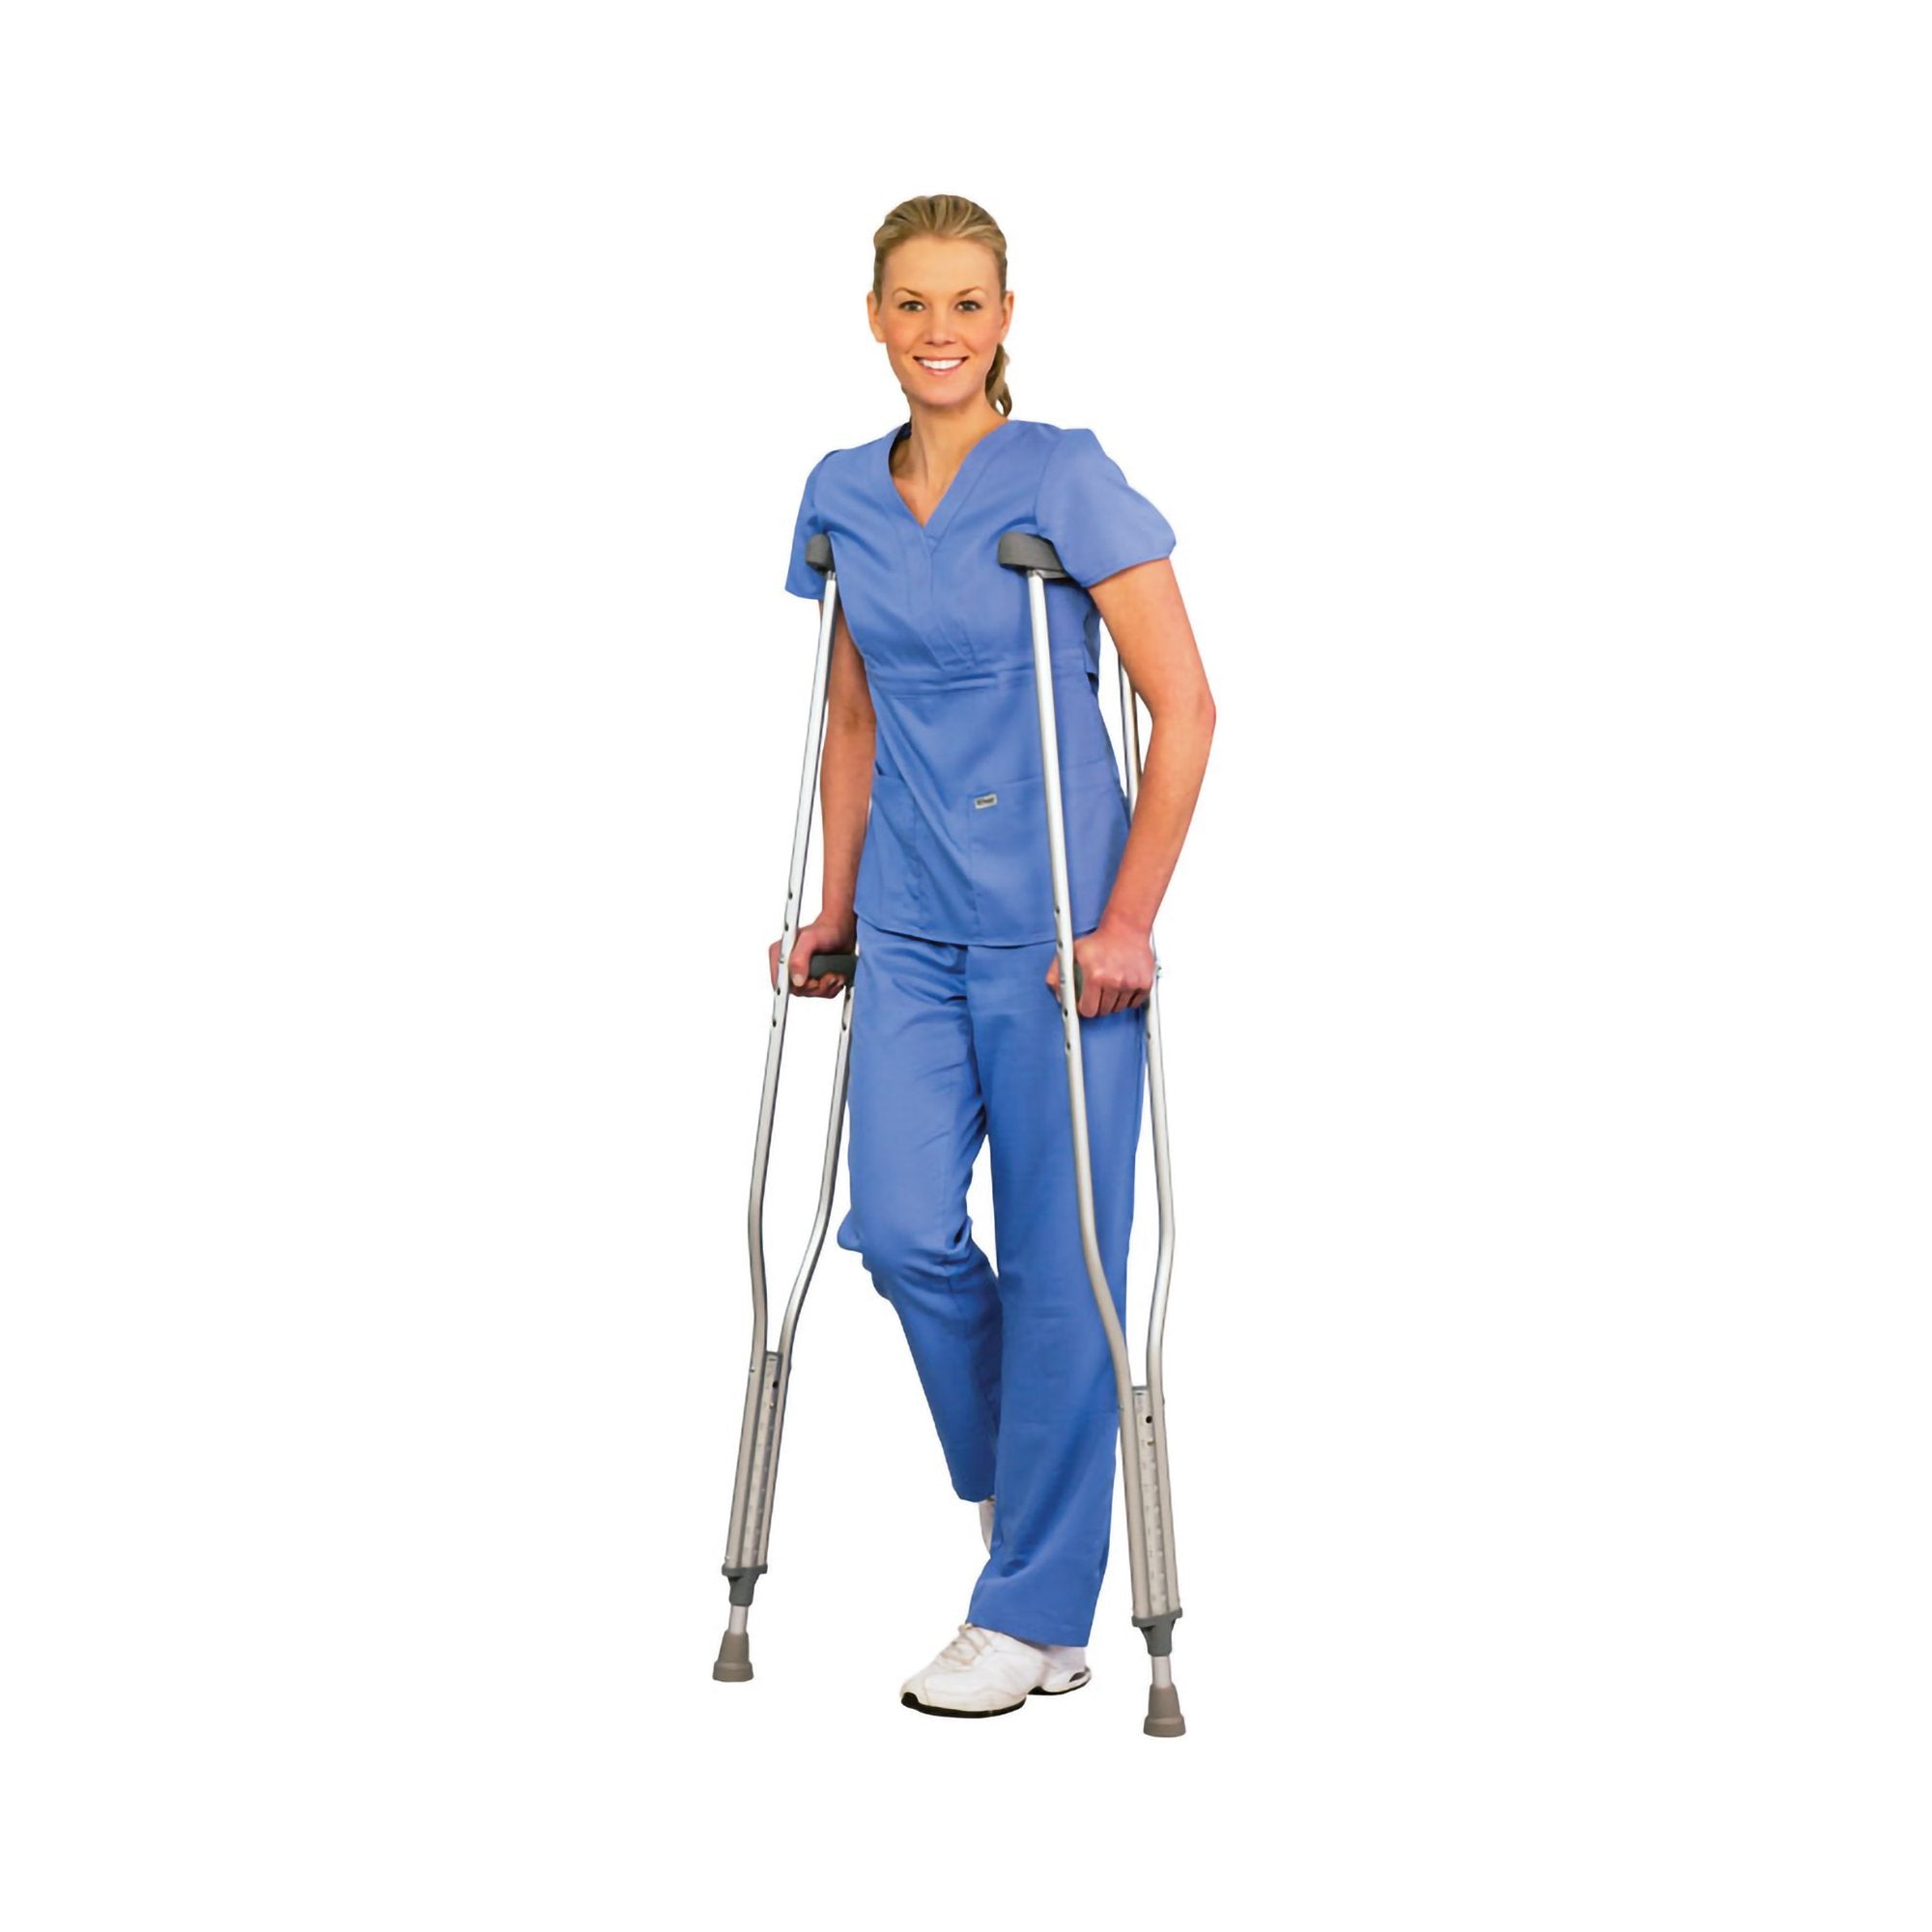 Underarm Crutches PremierPro™ Aluminum Frame Tall Adult 300 lbs. Weight Capacity Push Button Adjustment